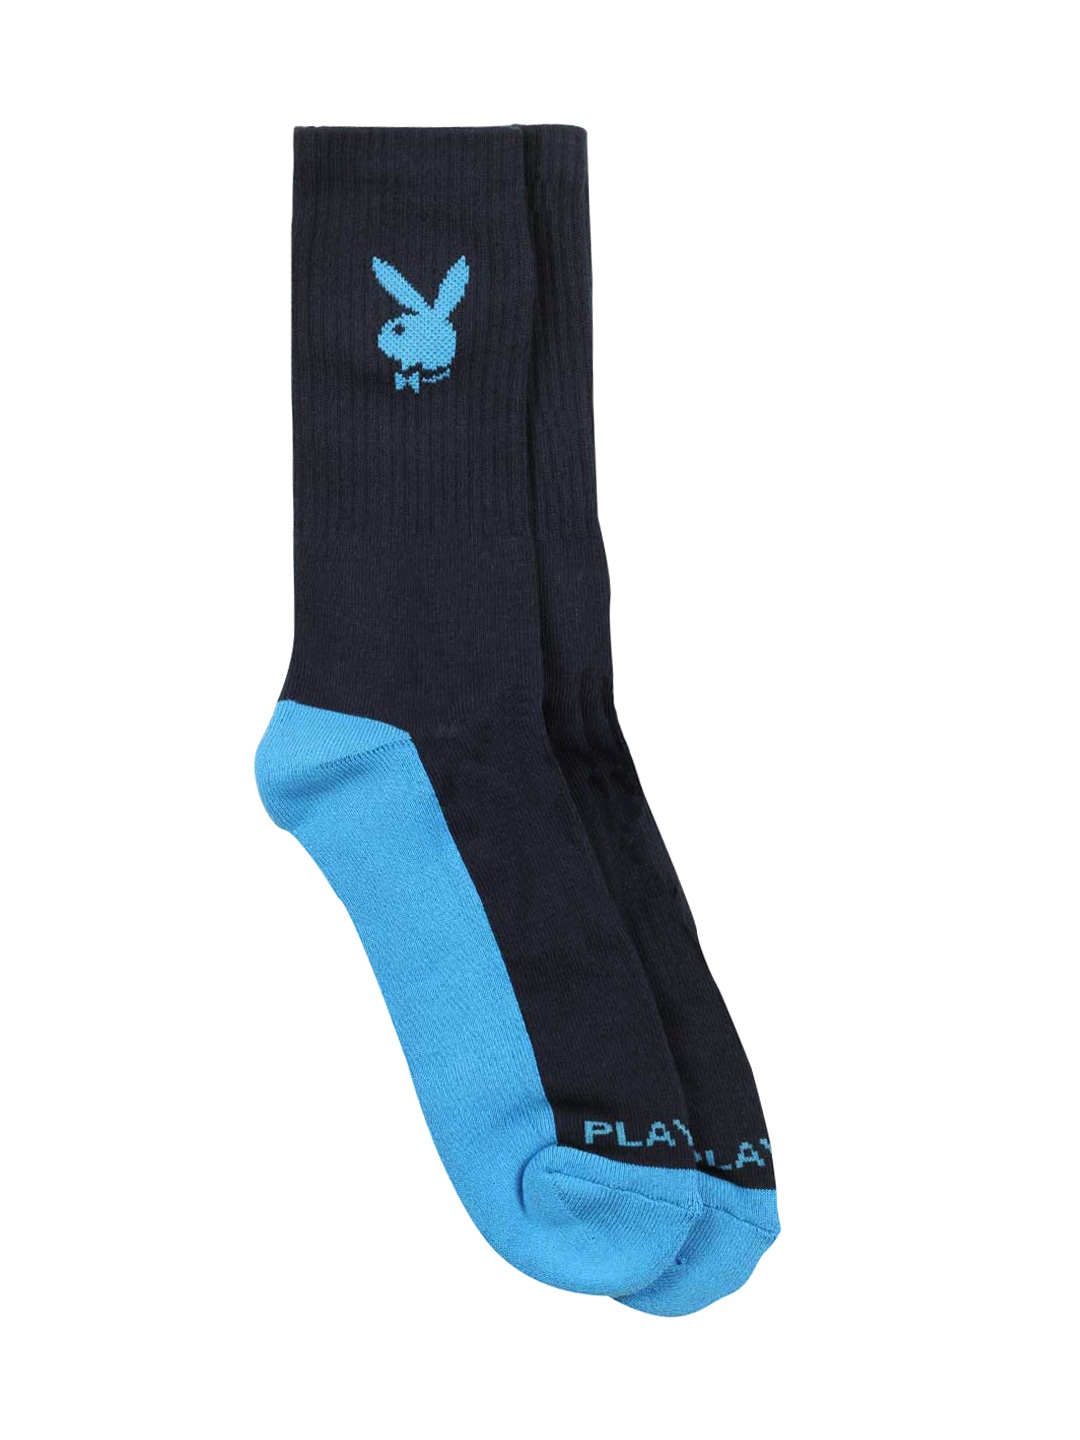 Playboy Men Blue Socks